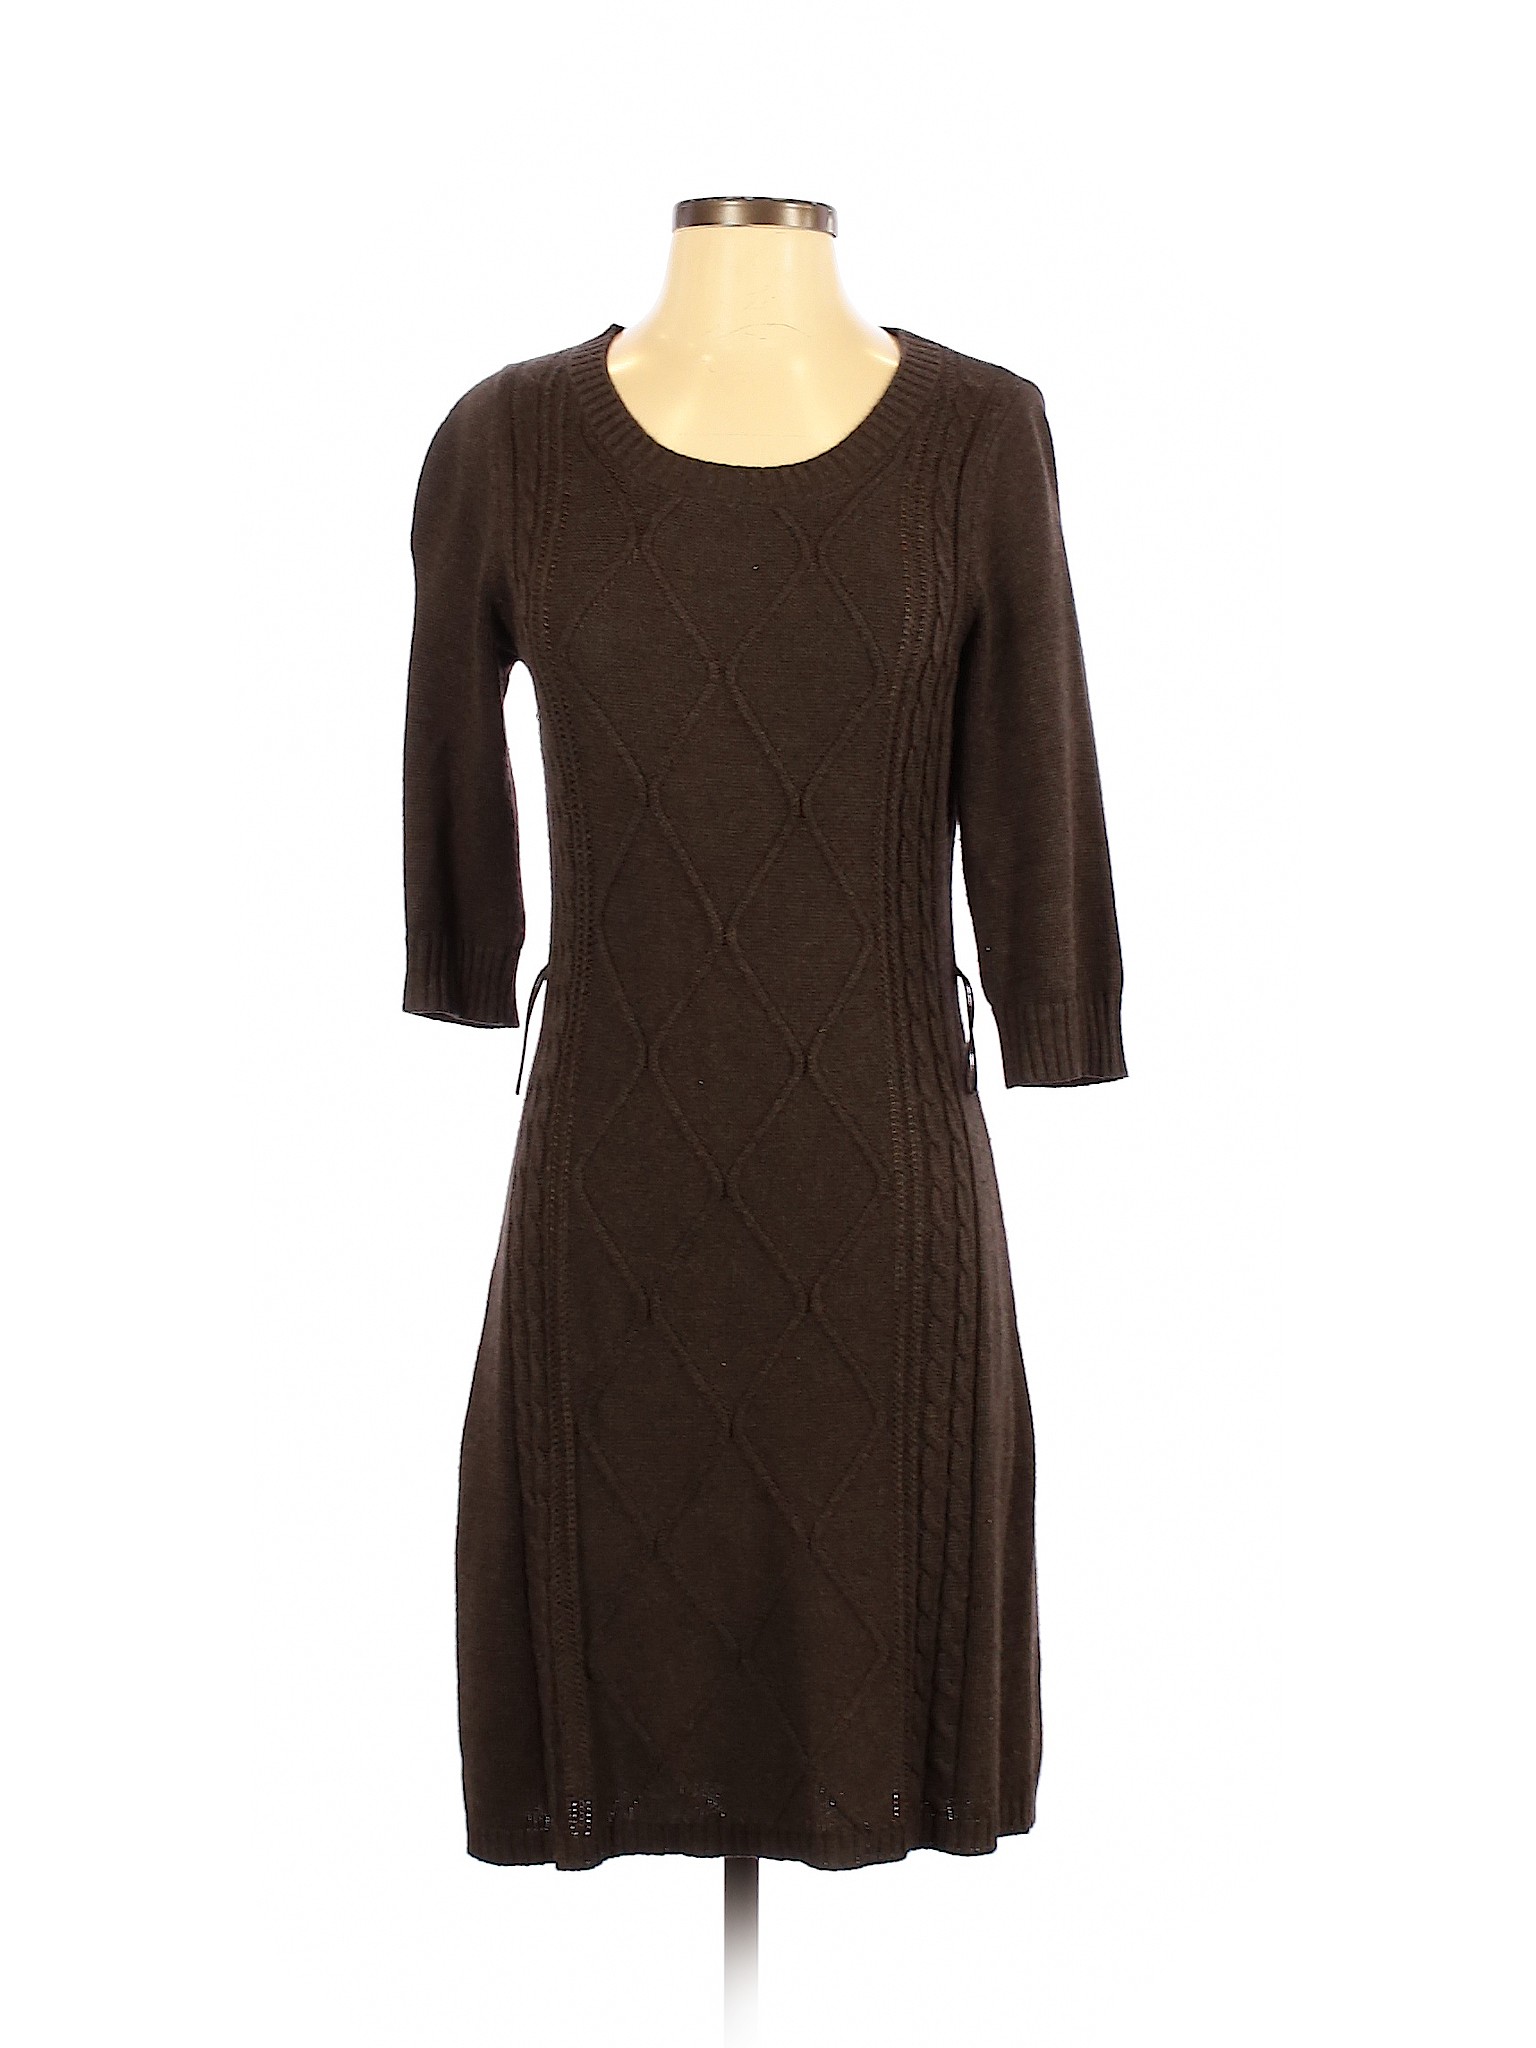 Merona Women Brown Casual Dress S | eBay